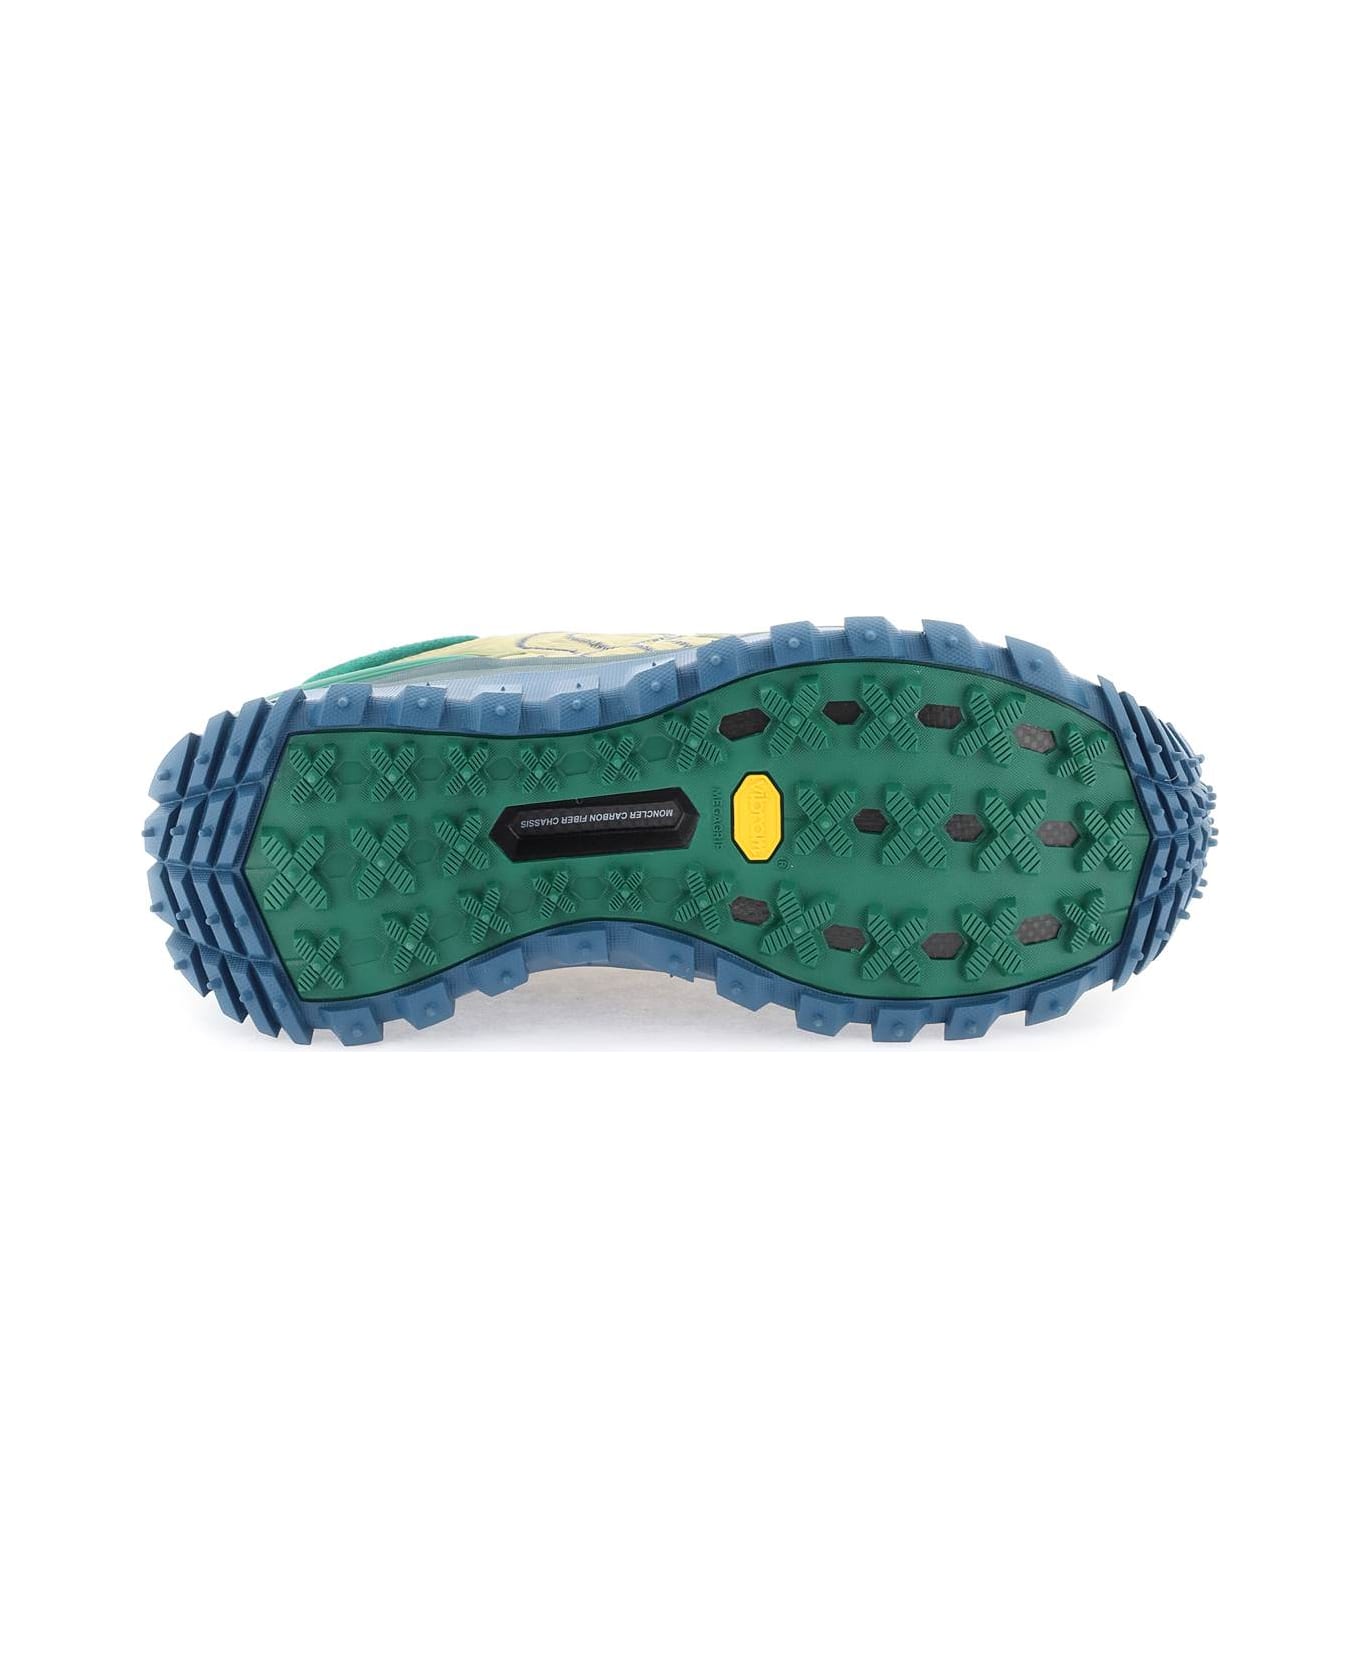 Moncler Genius Trailgrip Grain Sneakers - Multicolor